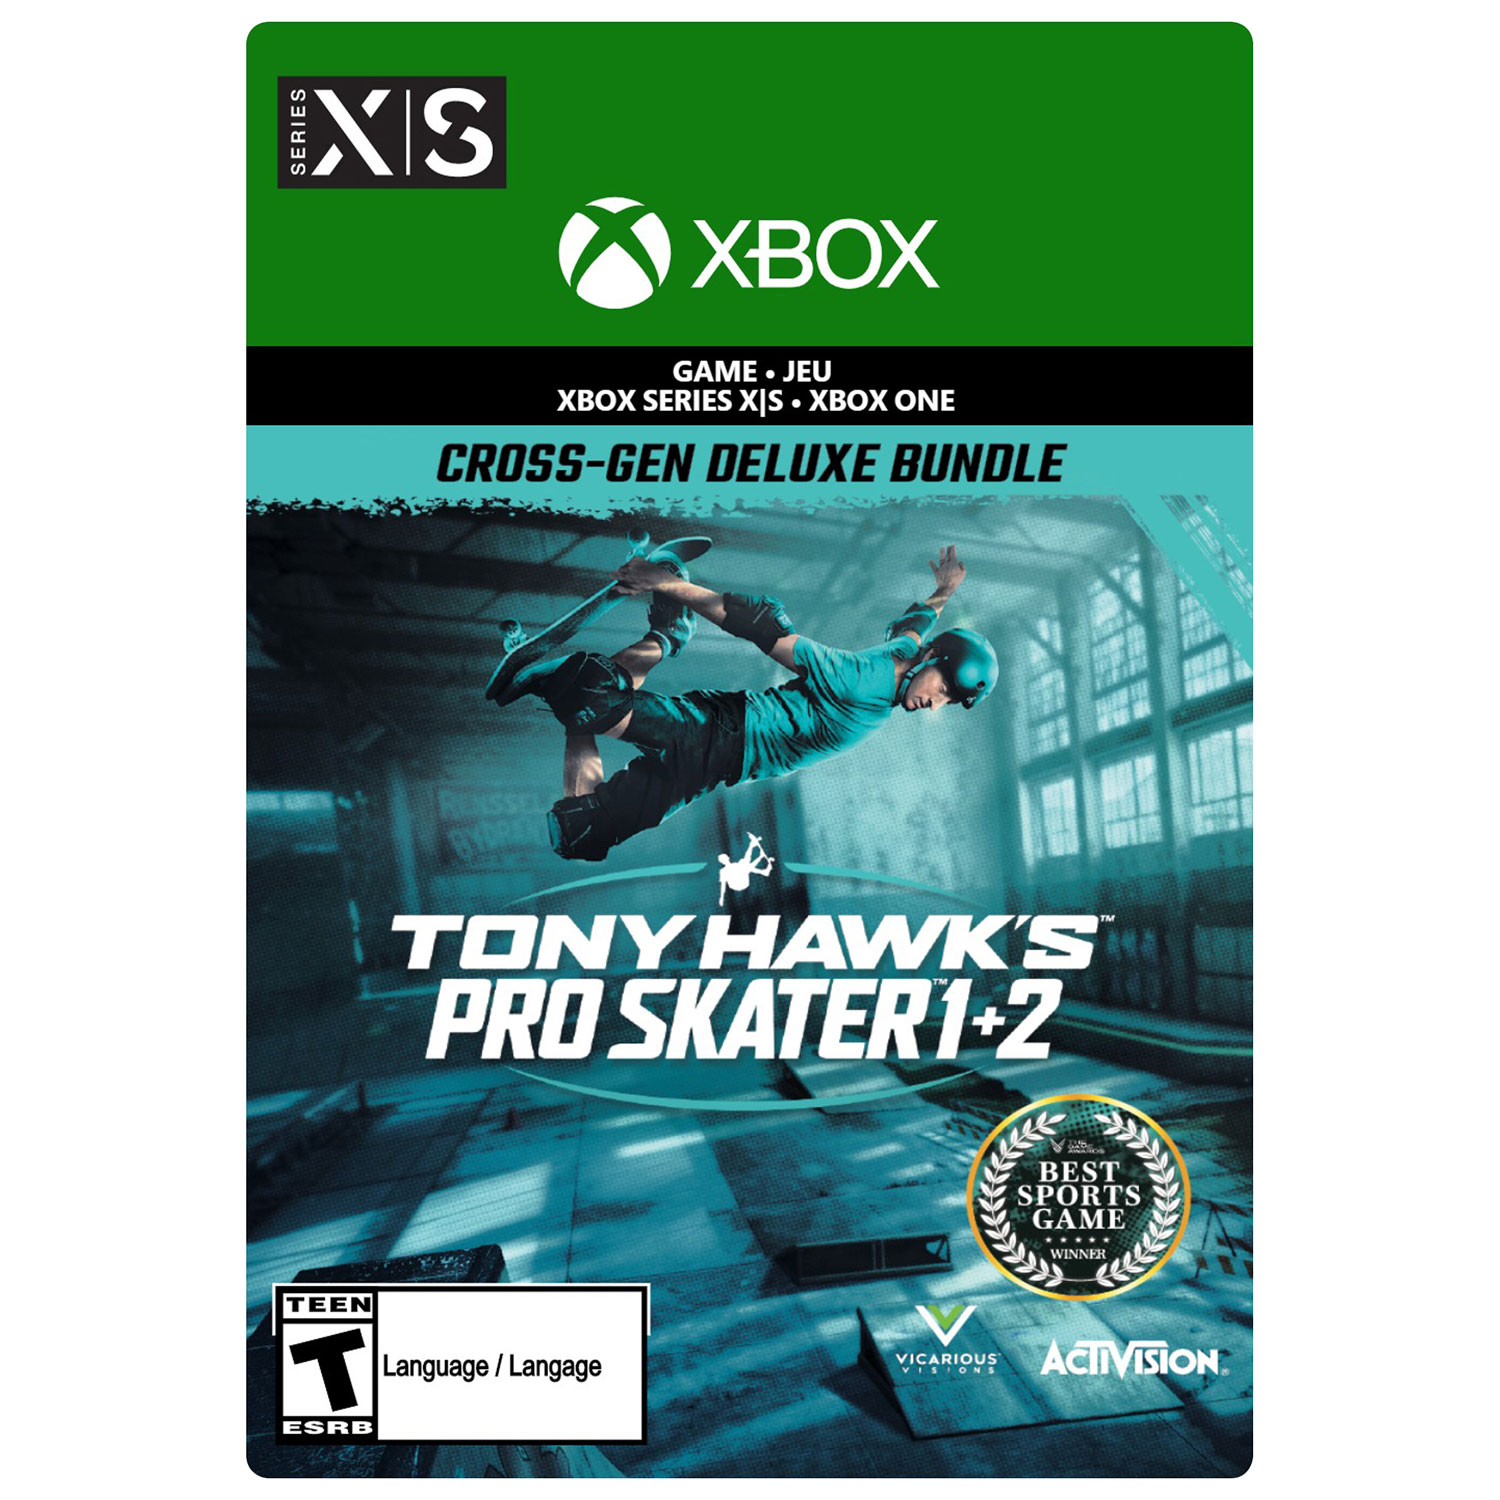 Tony Hawk's Pro Skater 1+2 Cross-Gen Deluxe Bundle (Xbox Series X|S / Xbox One) - Digital Download